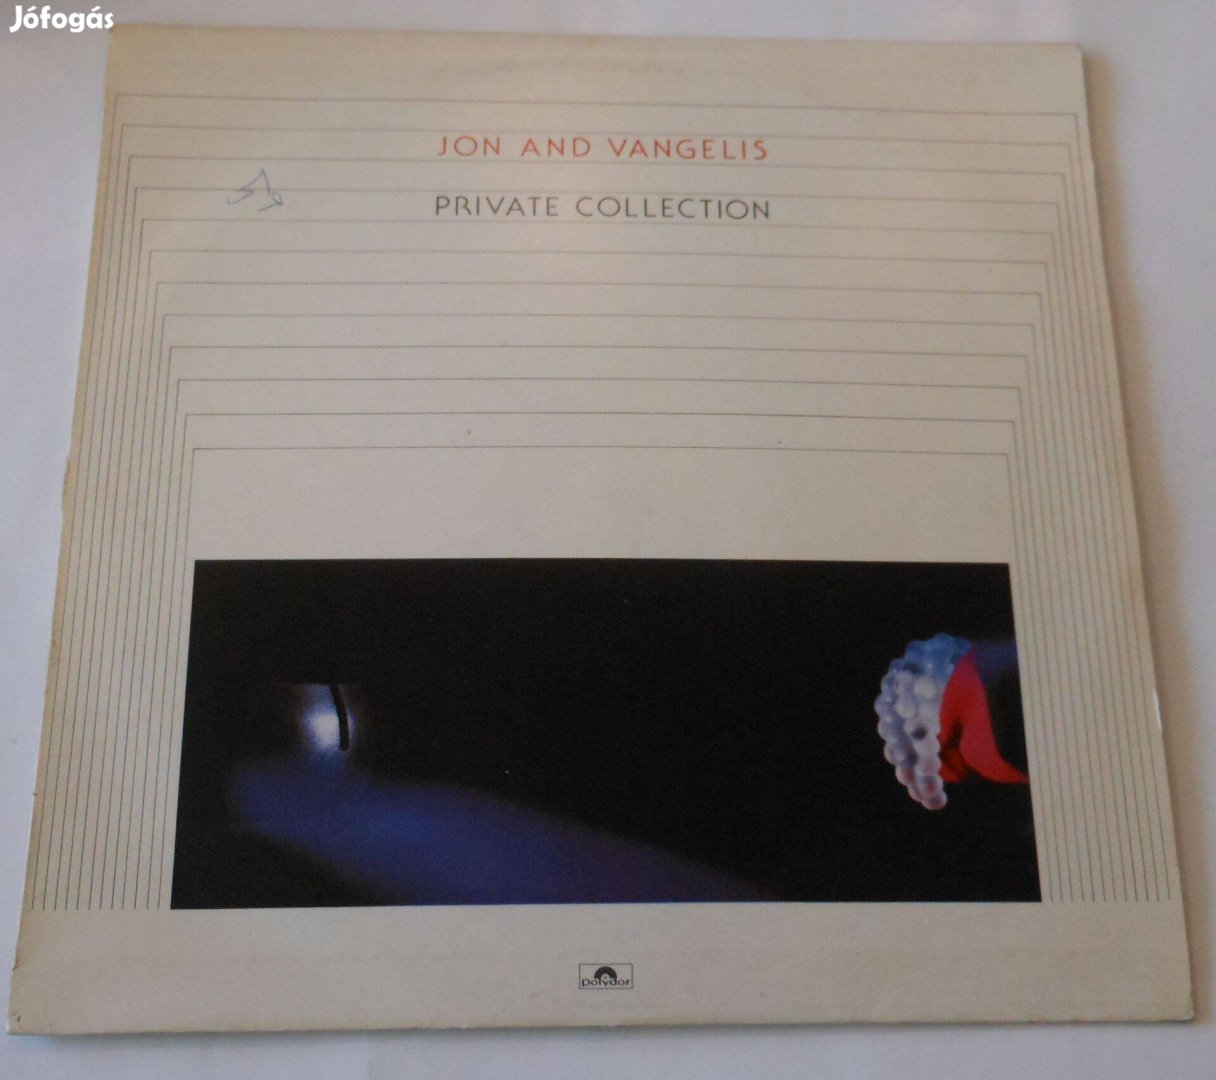 Jon and Vangelis: Private collection LP. Jugó